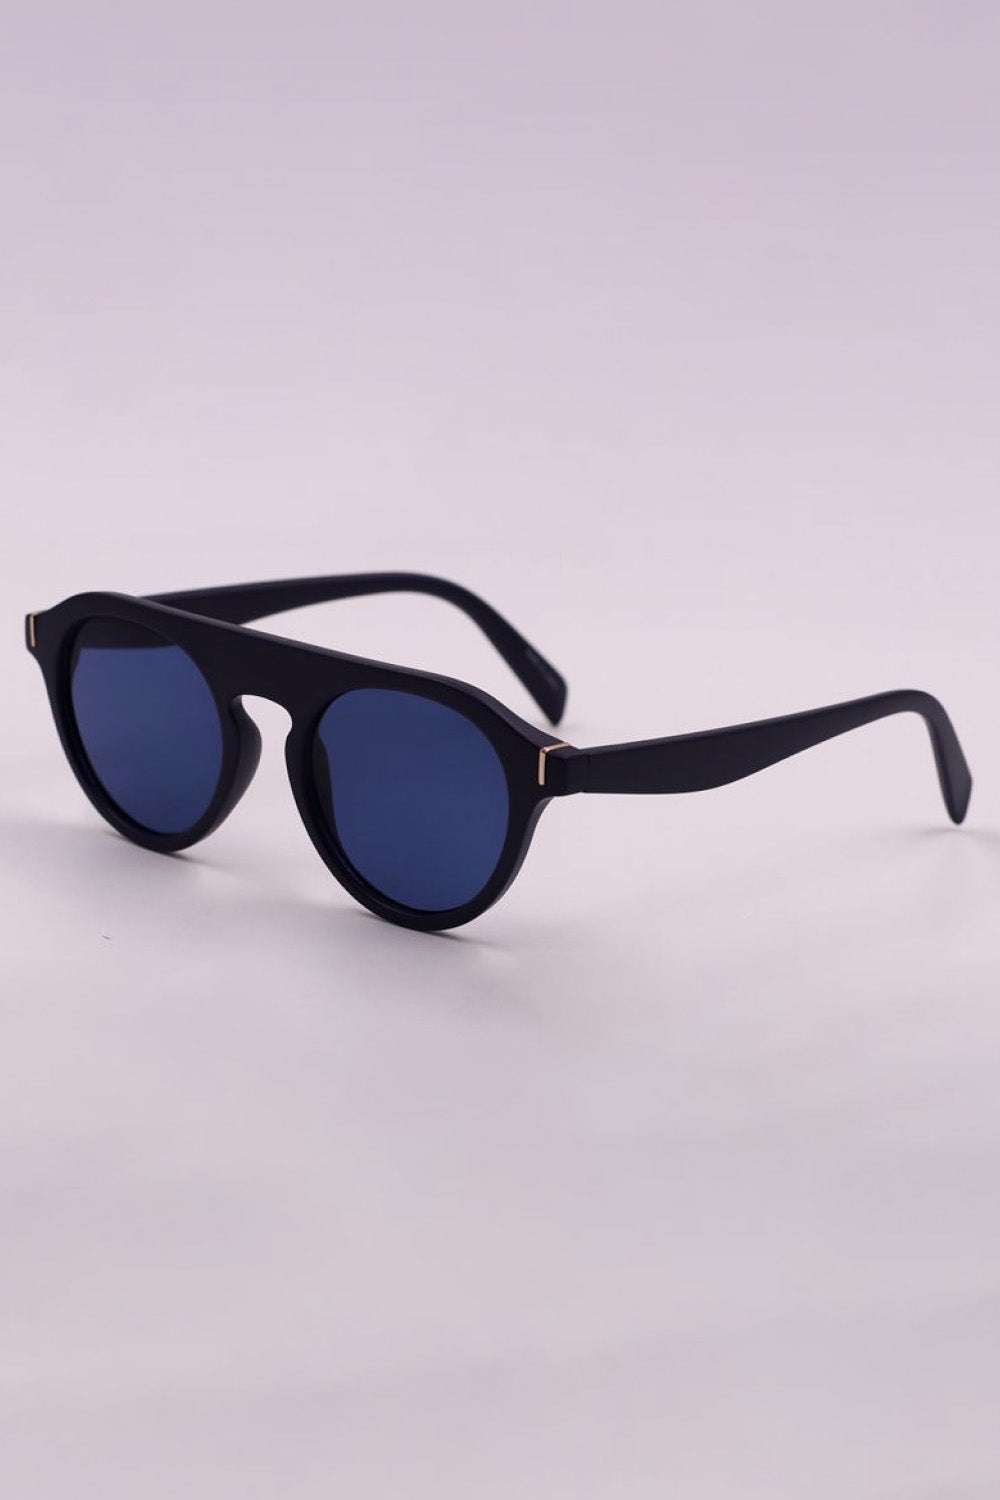 Thistle 3-Piece Round Polycarbonate Full Rim Sunglasses Sentient Beauty Fashions Apparel & Accessories